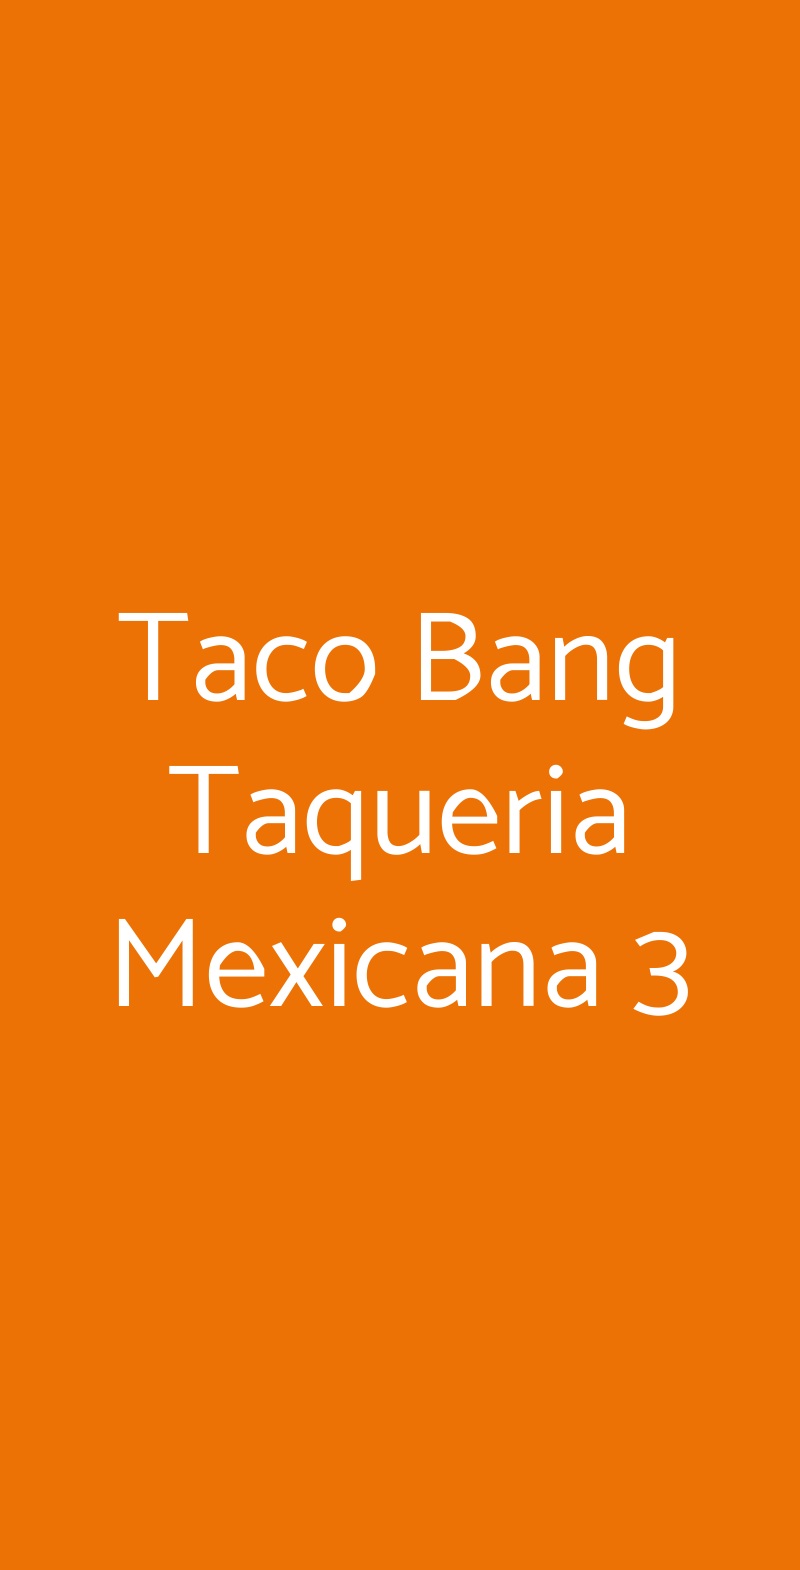 Taco Bang Taqueria Mexicana 3 Torino menù 1 pagina